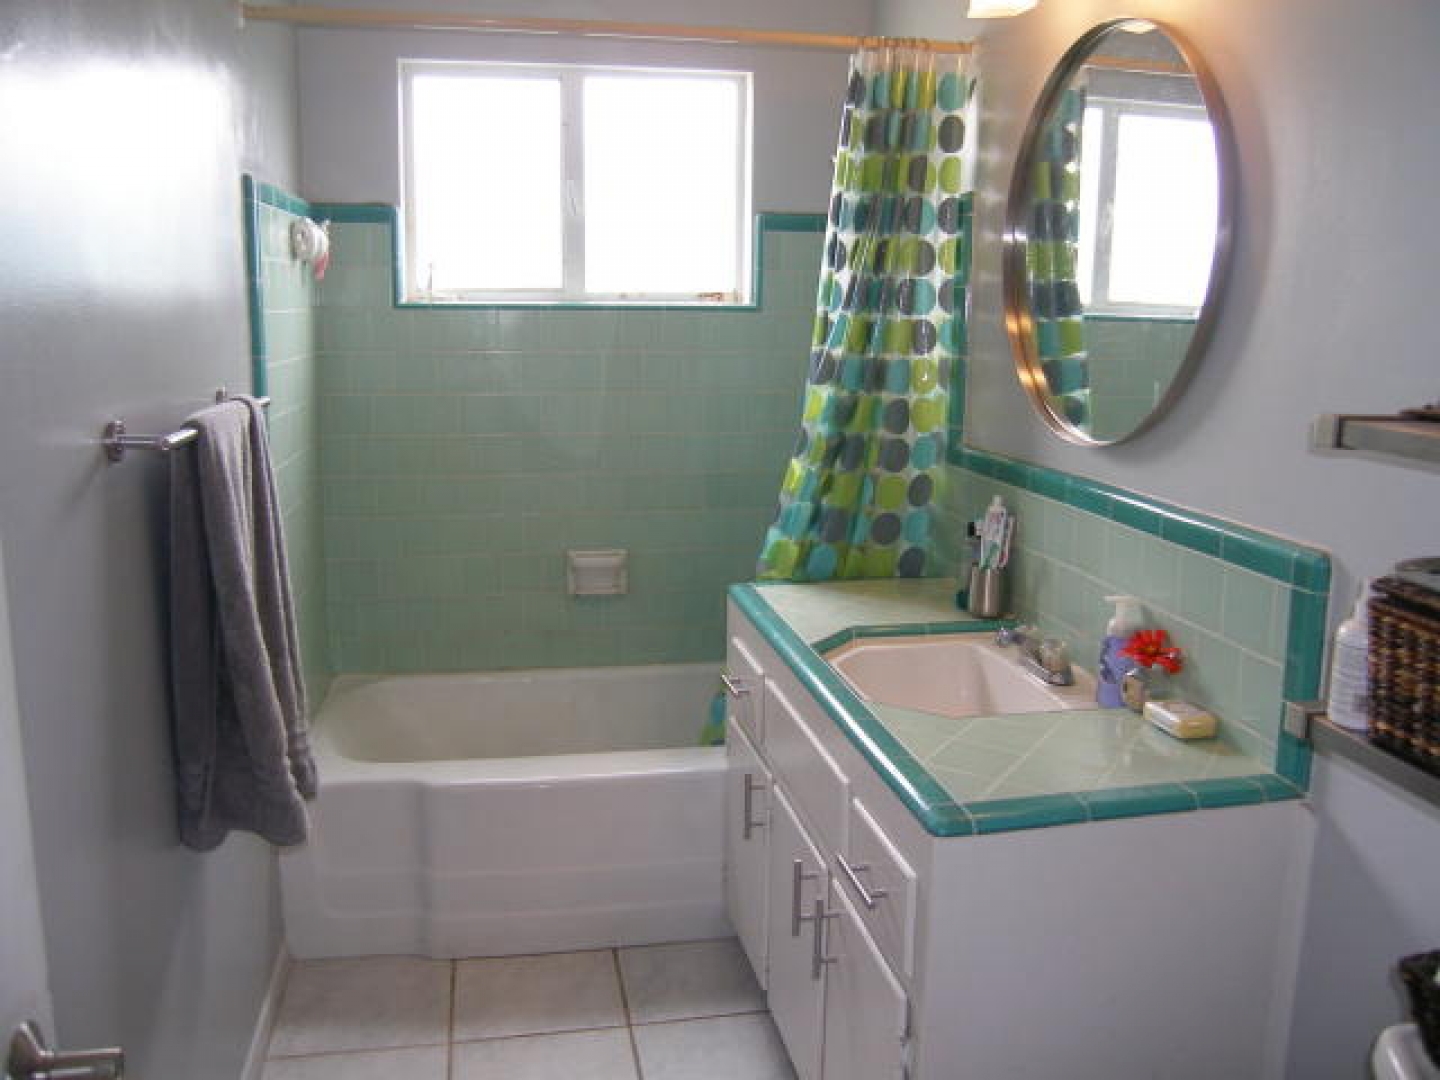 original-vintage-1952-bathroom-tile-great-pristine-condition-phoenix-with-best-inspiration-and-old-bathroom-tile